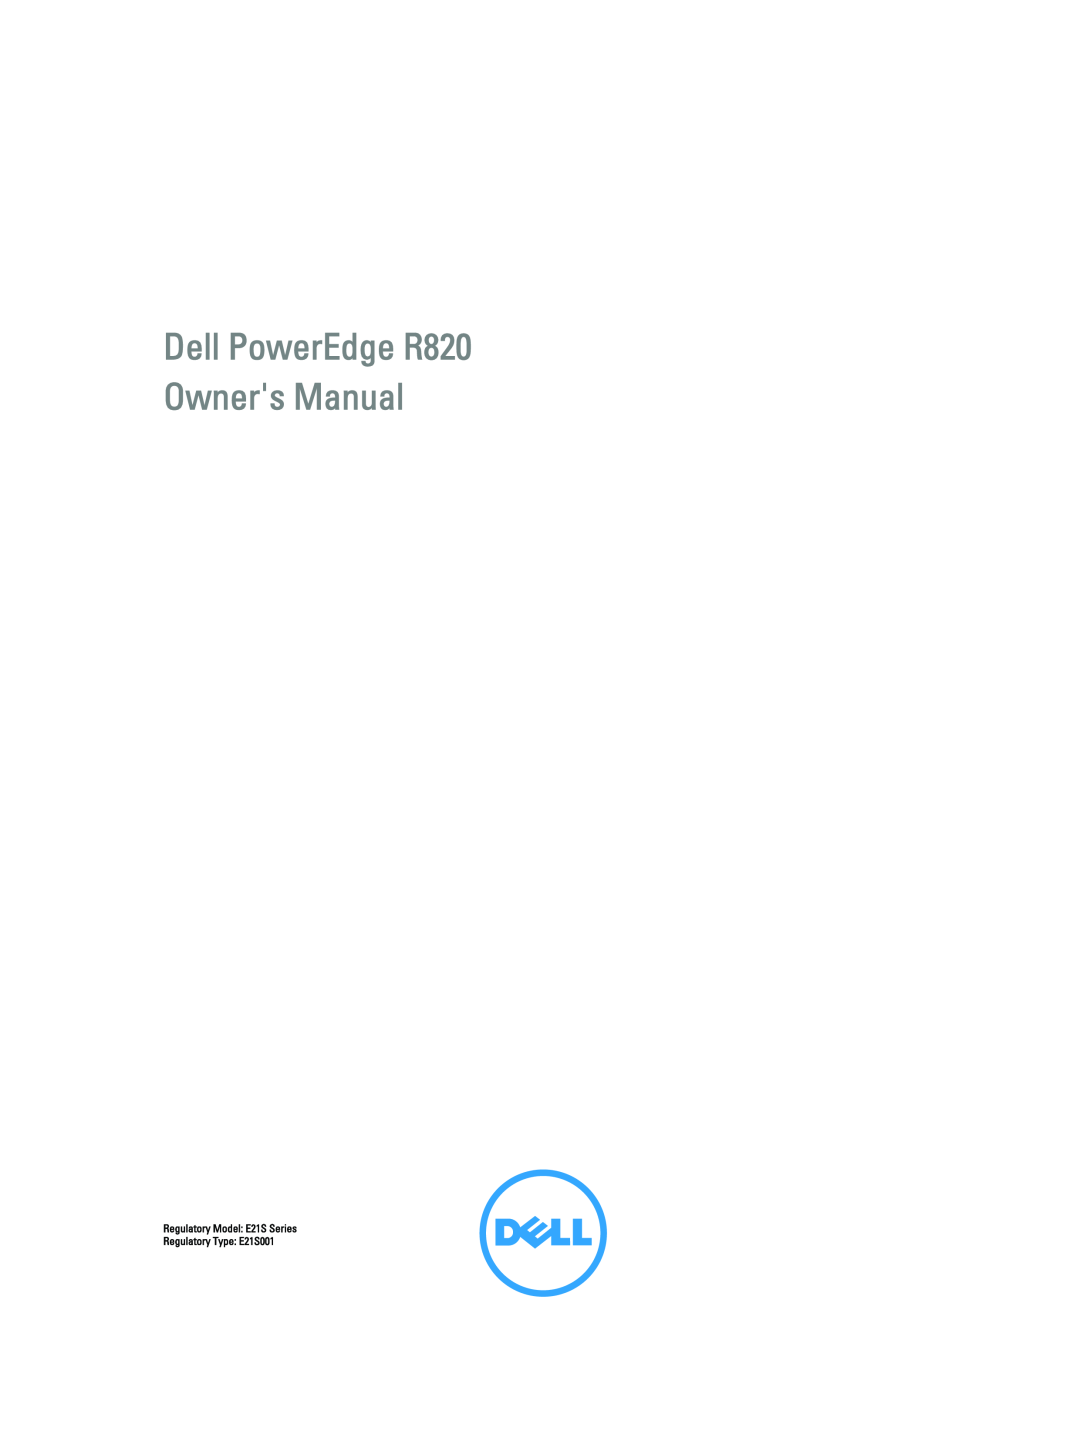 Dell owner manual Dell PowerEdge R820 Owners Manual, Regulatory Model E21S Series Regulatory Type E21S001 